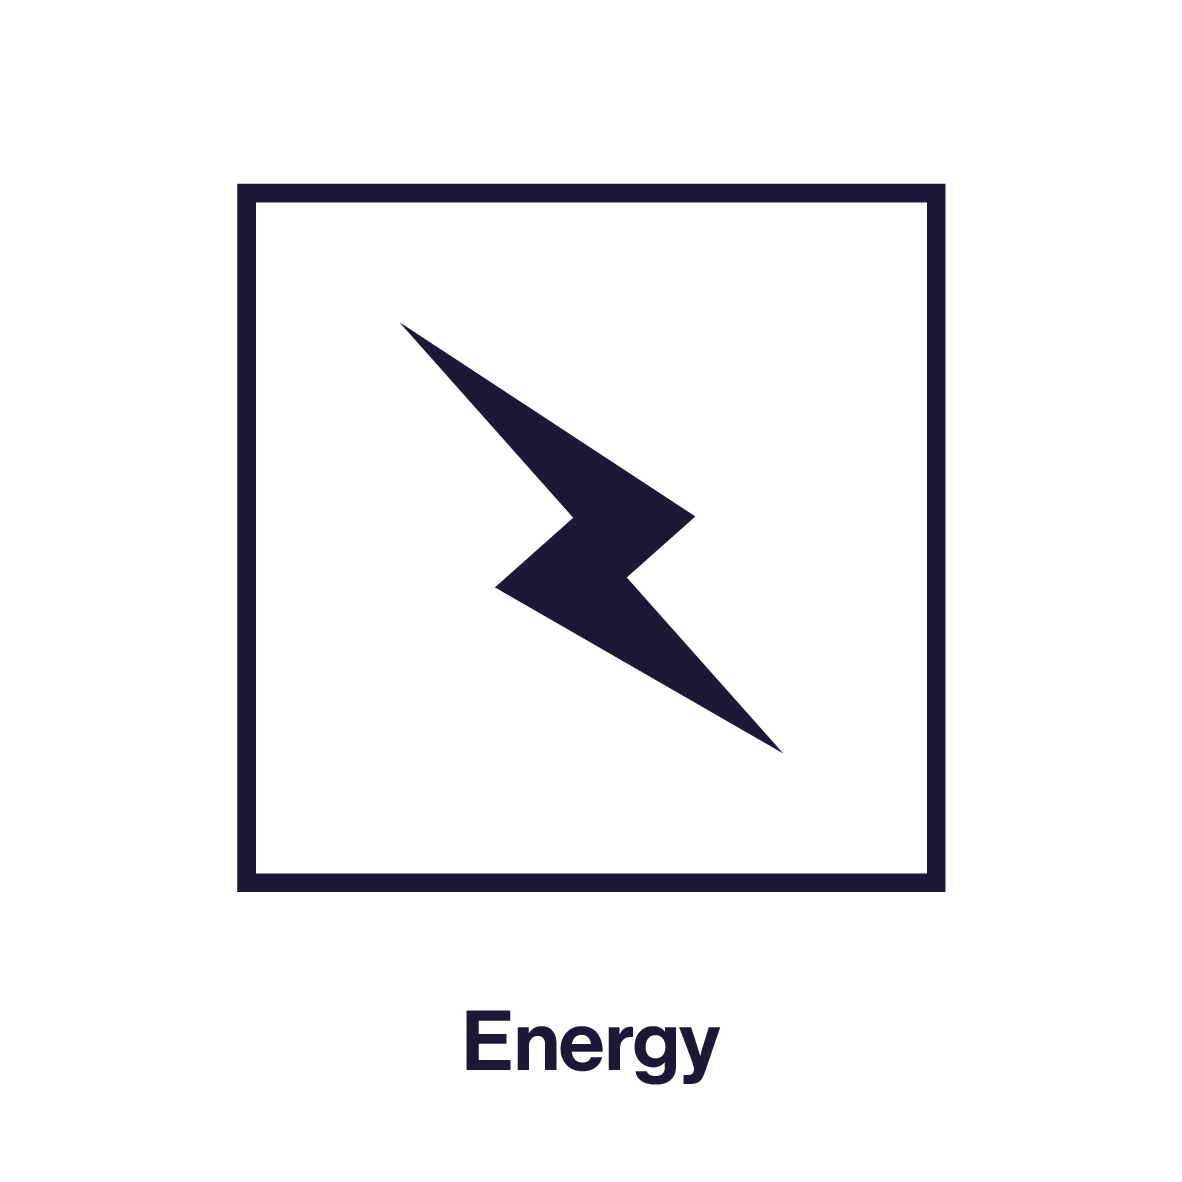 BREEAM assessment category, energy icon